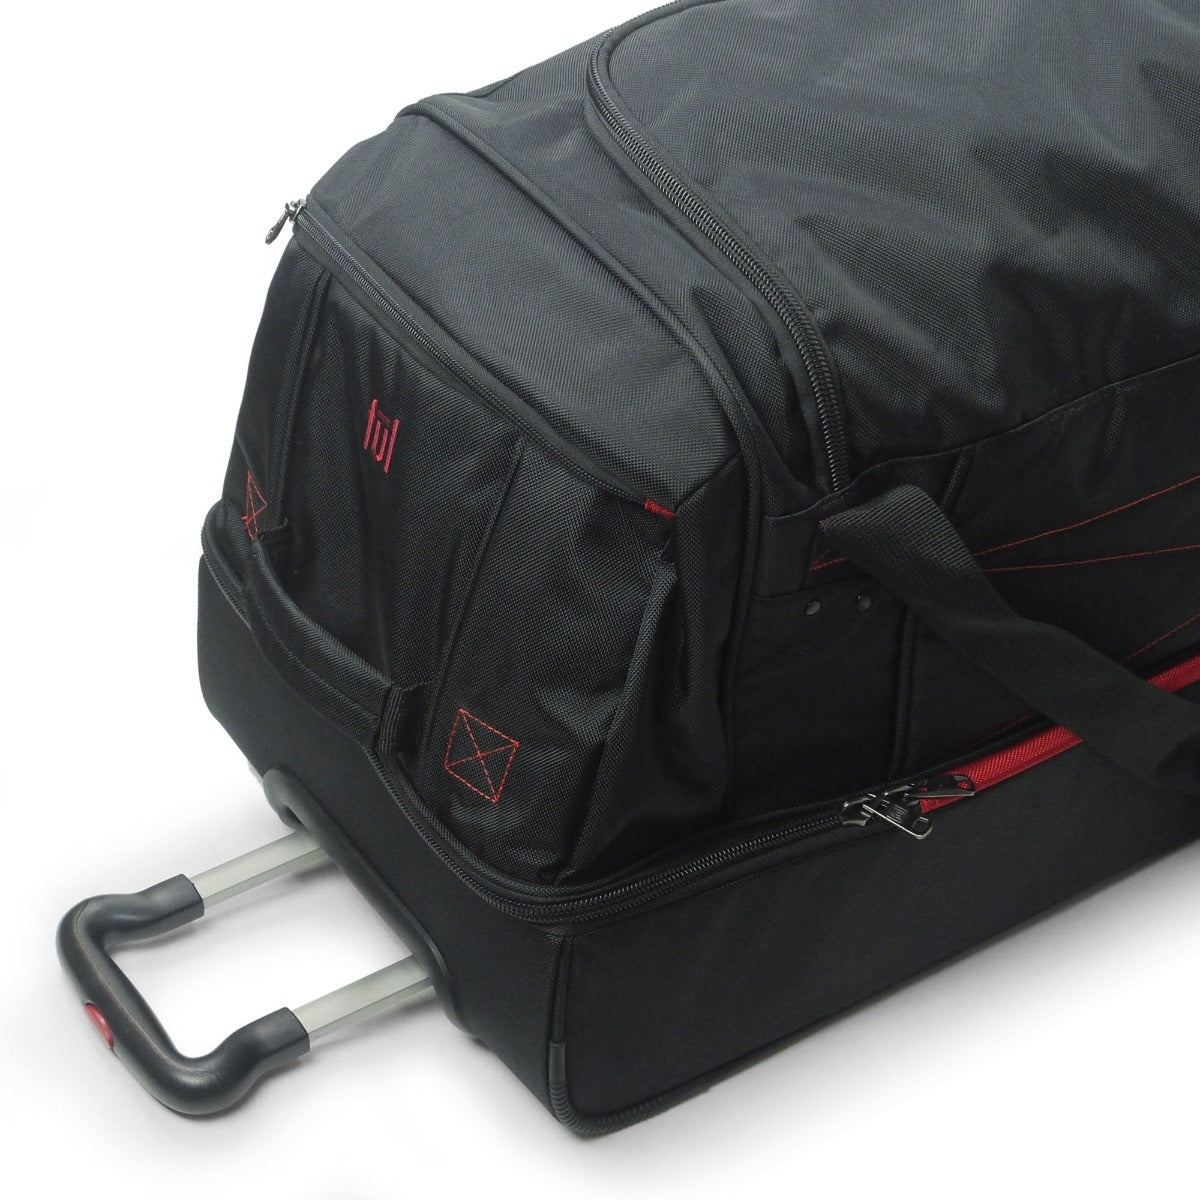 Ful Tour Manger 36" black oversized wheeled rolling duffle bag for travel